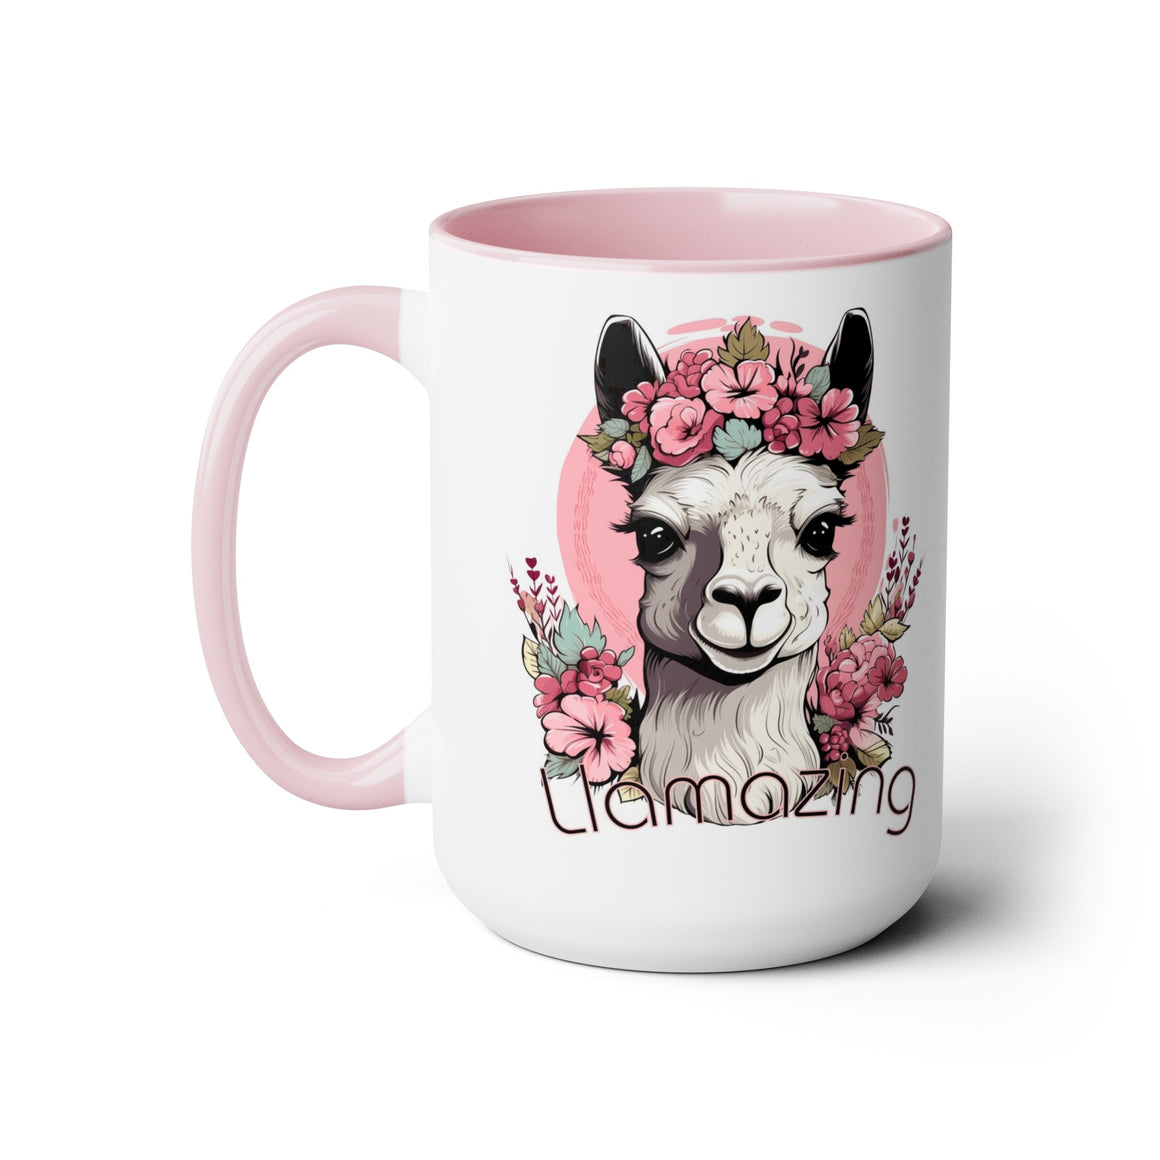 Llamazing - Personalization Optional - Two-Tone Coffee Mugs, 15oz, mom mug, mother, girlfriend, llama gift, llama love